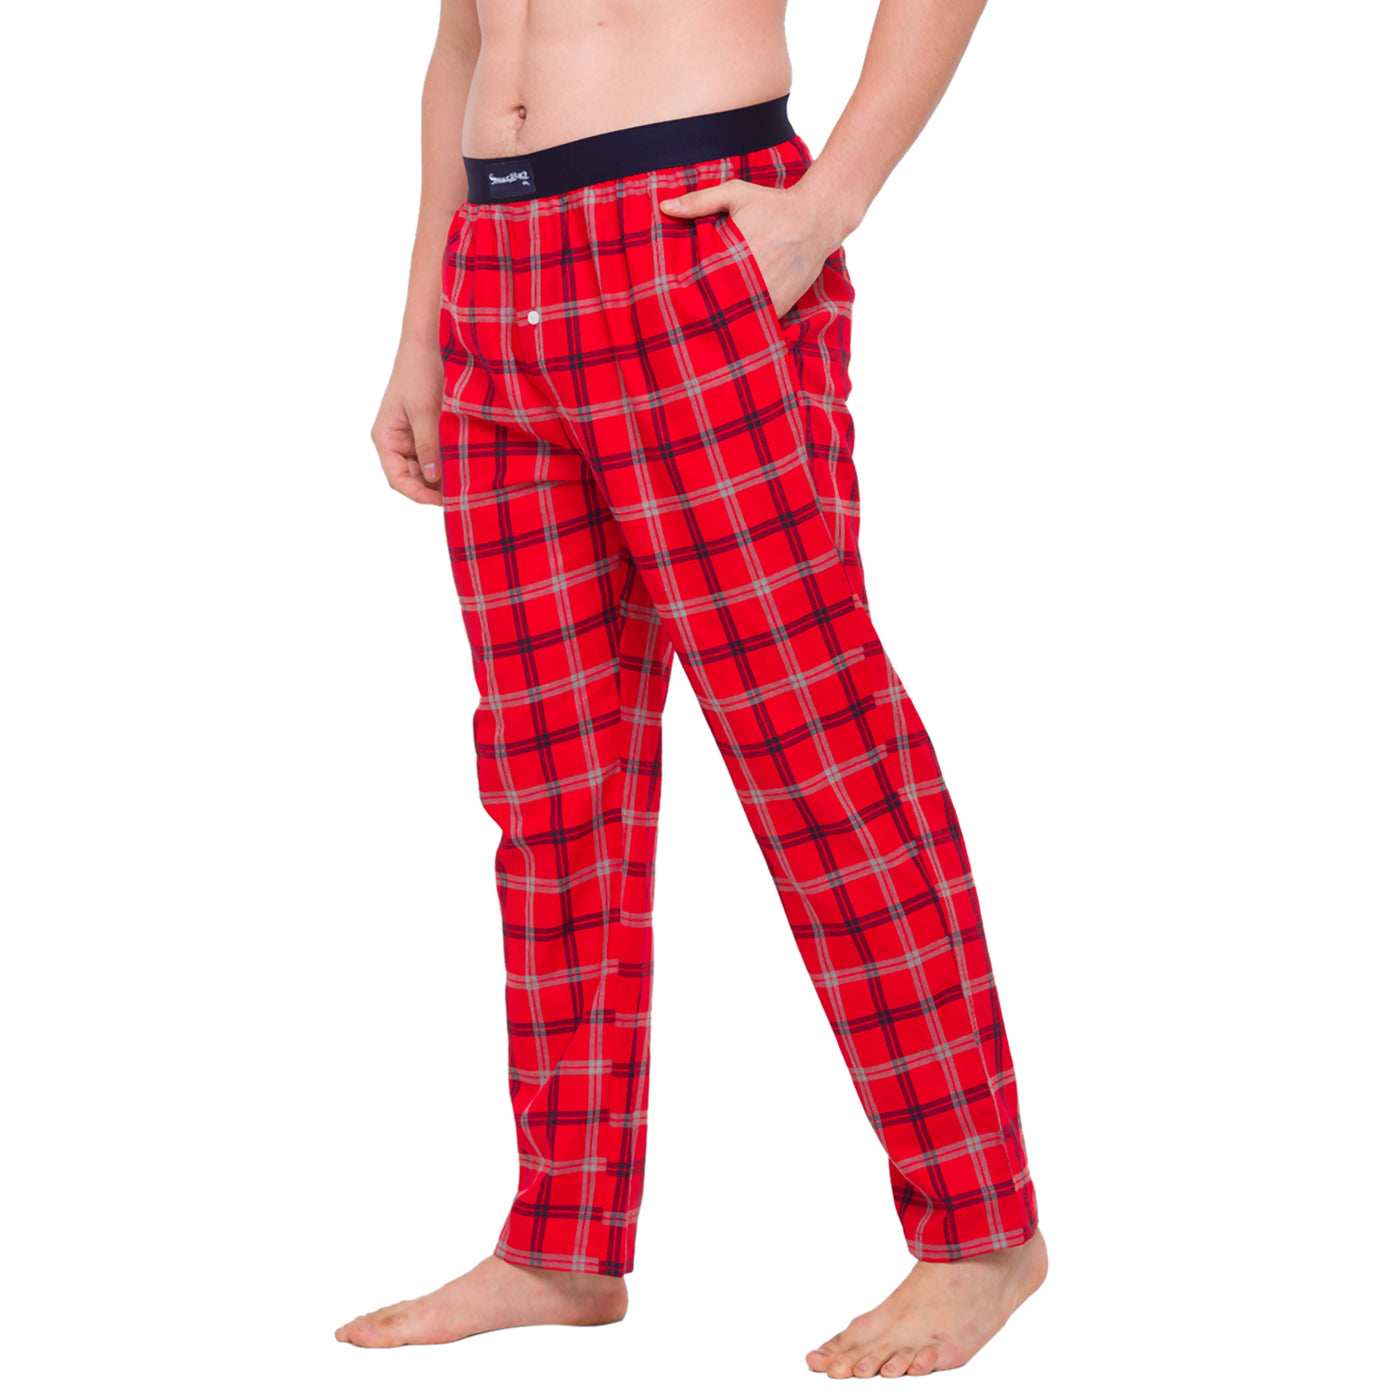 Cheery Red Checks Mens Pajama